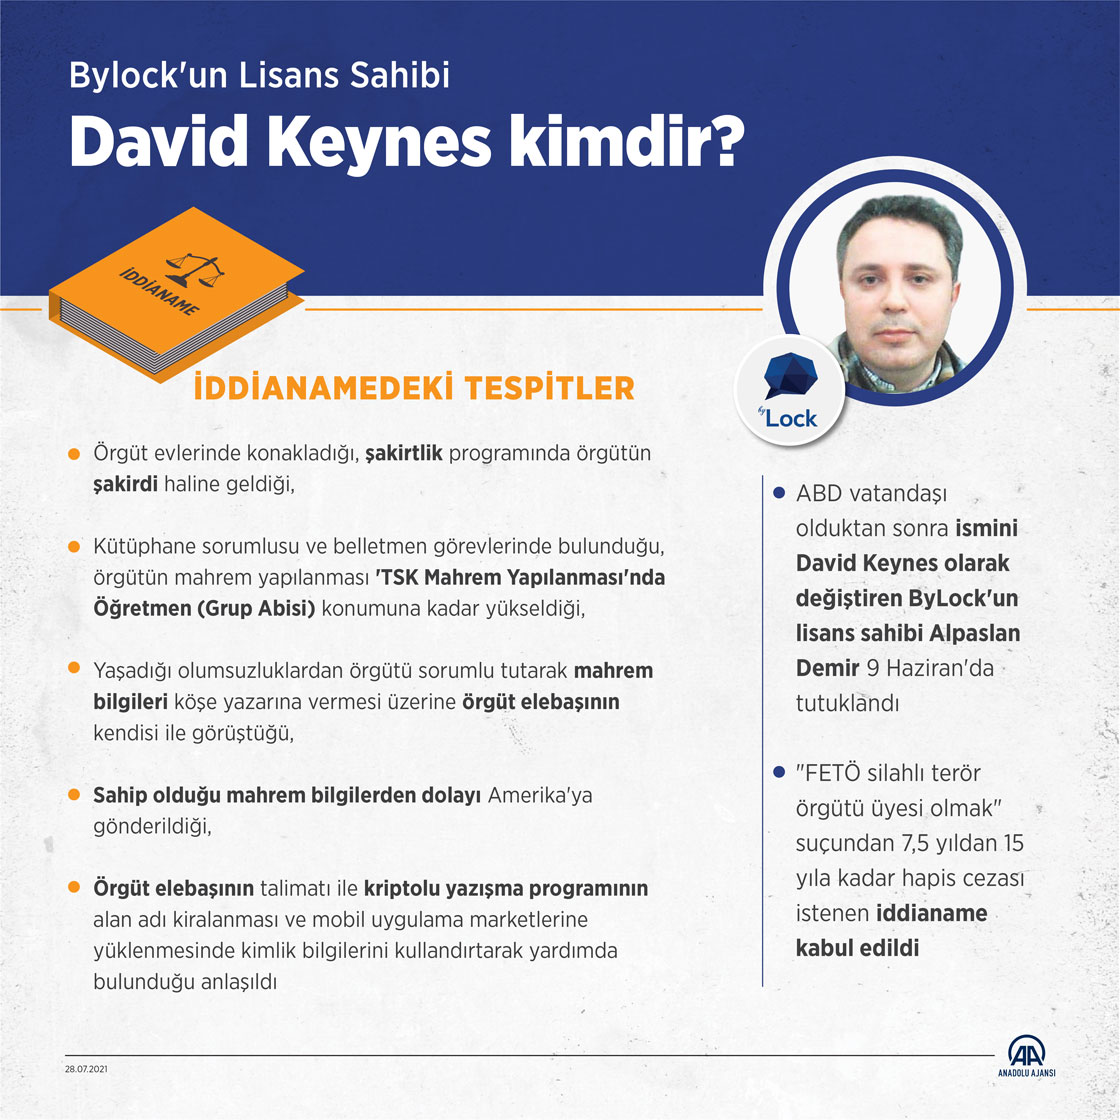 ByLock'un lisans sahibi David Keynes kimdir?